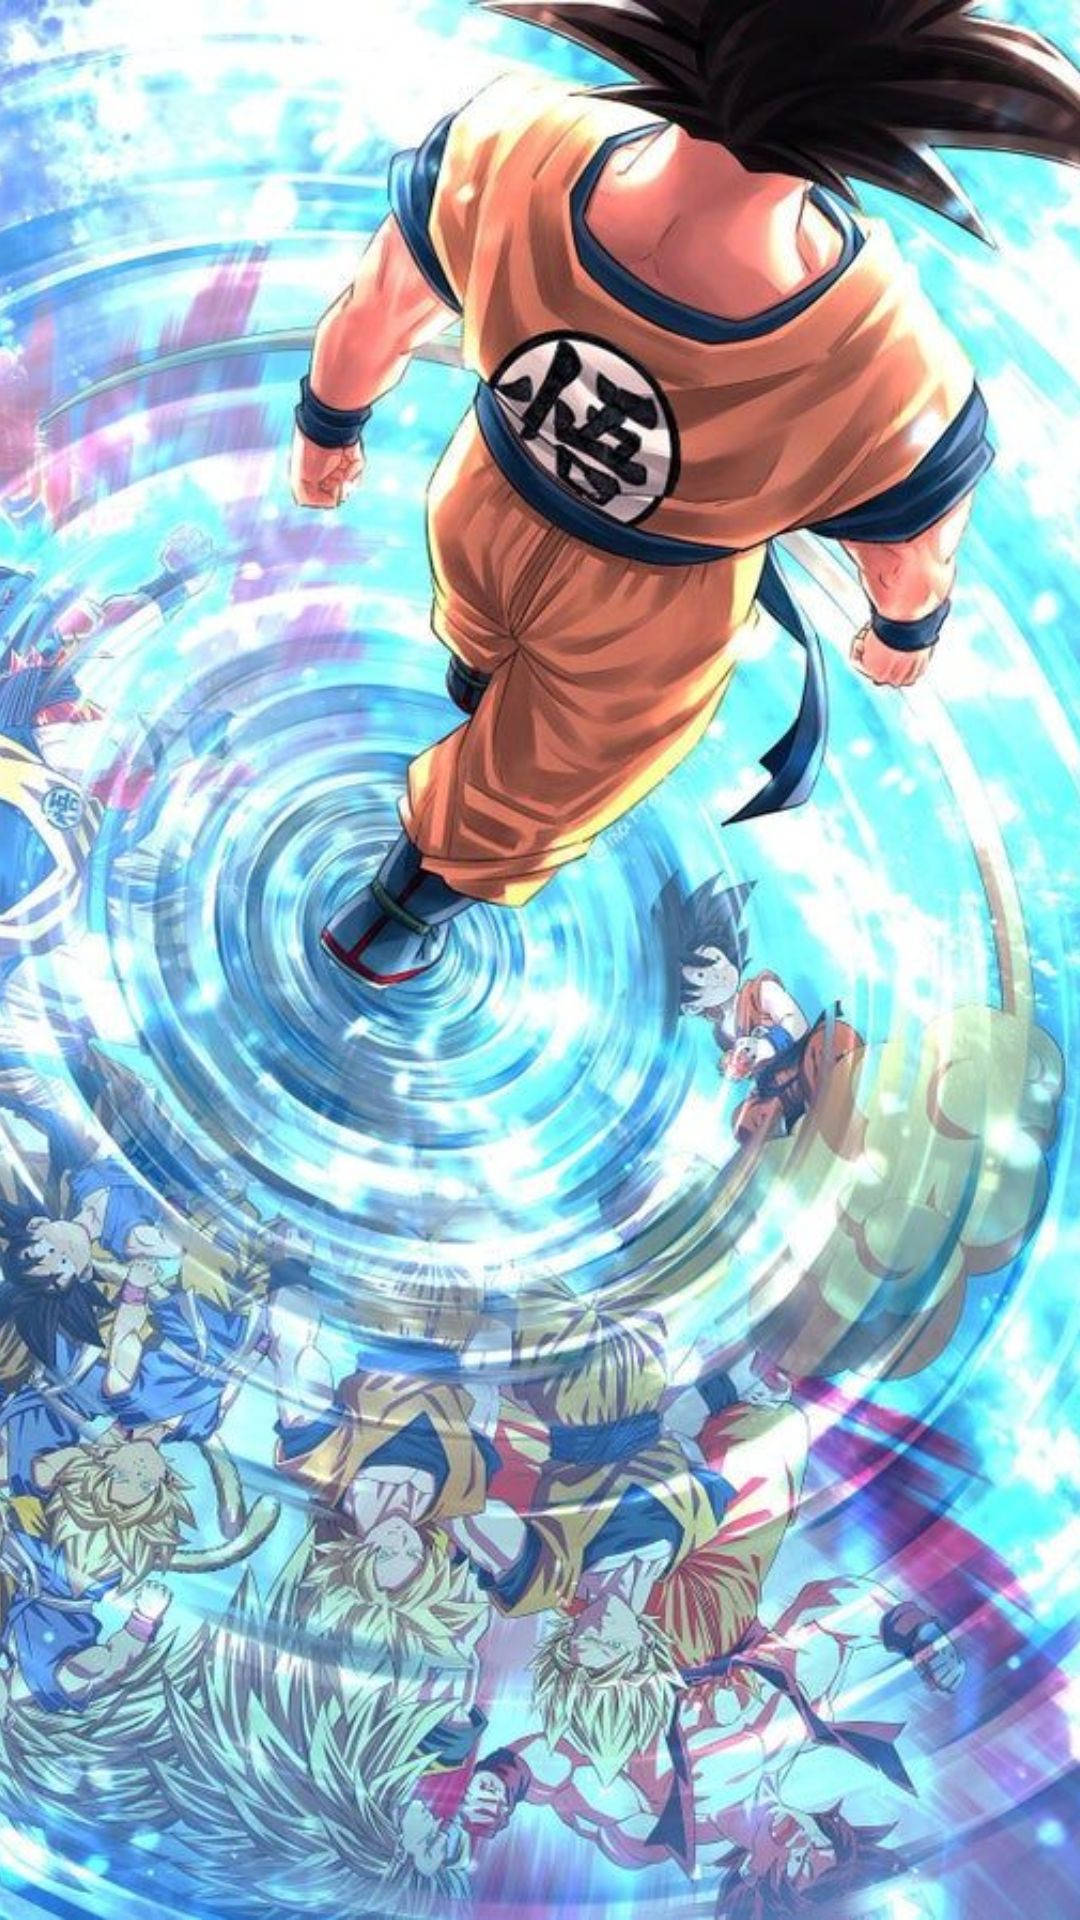 Caption: Epic Saiyan Battle Display - Dragon Ball Z Iphone Wallpaper Background